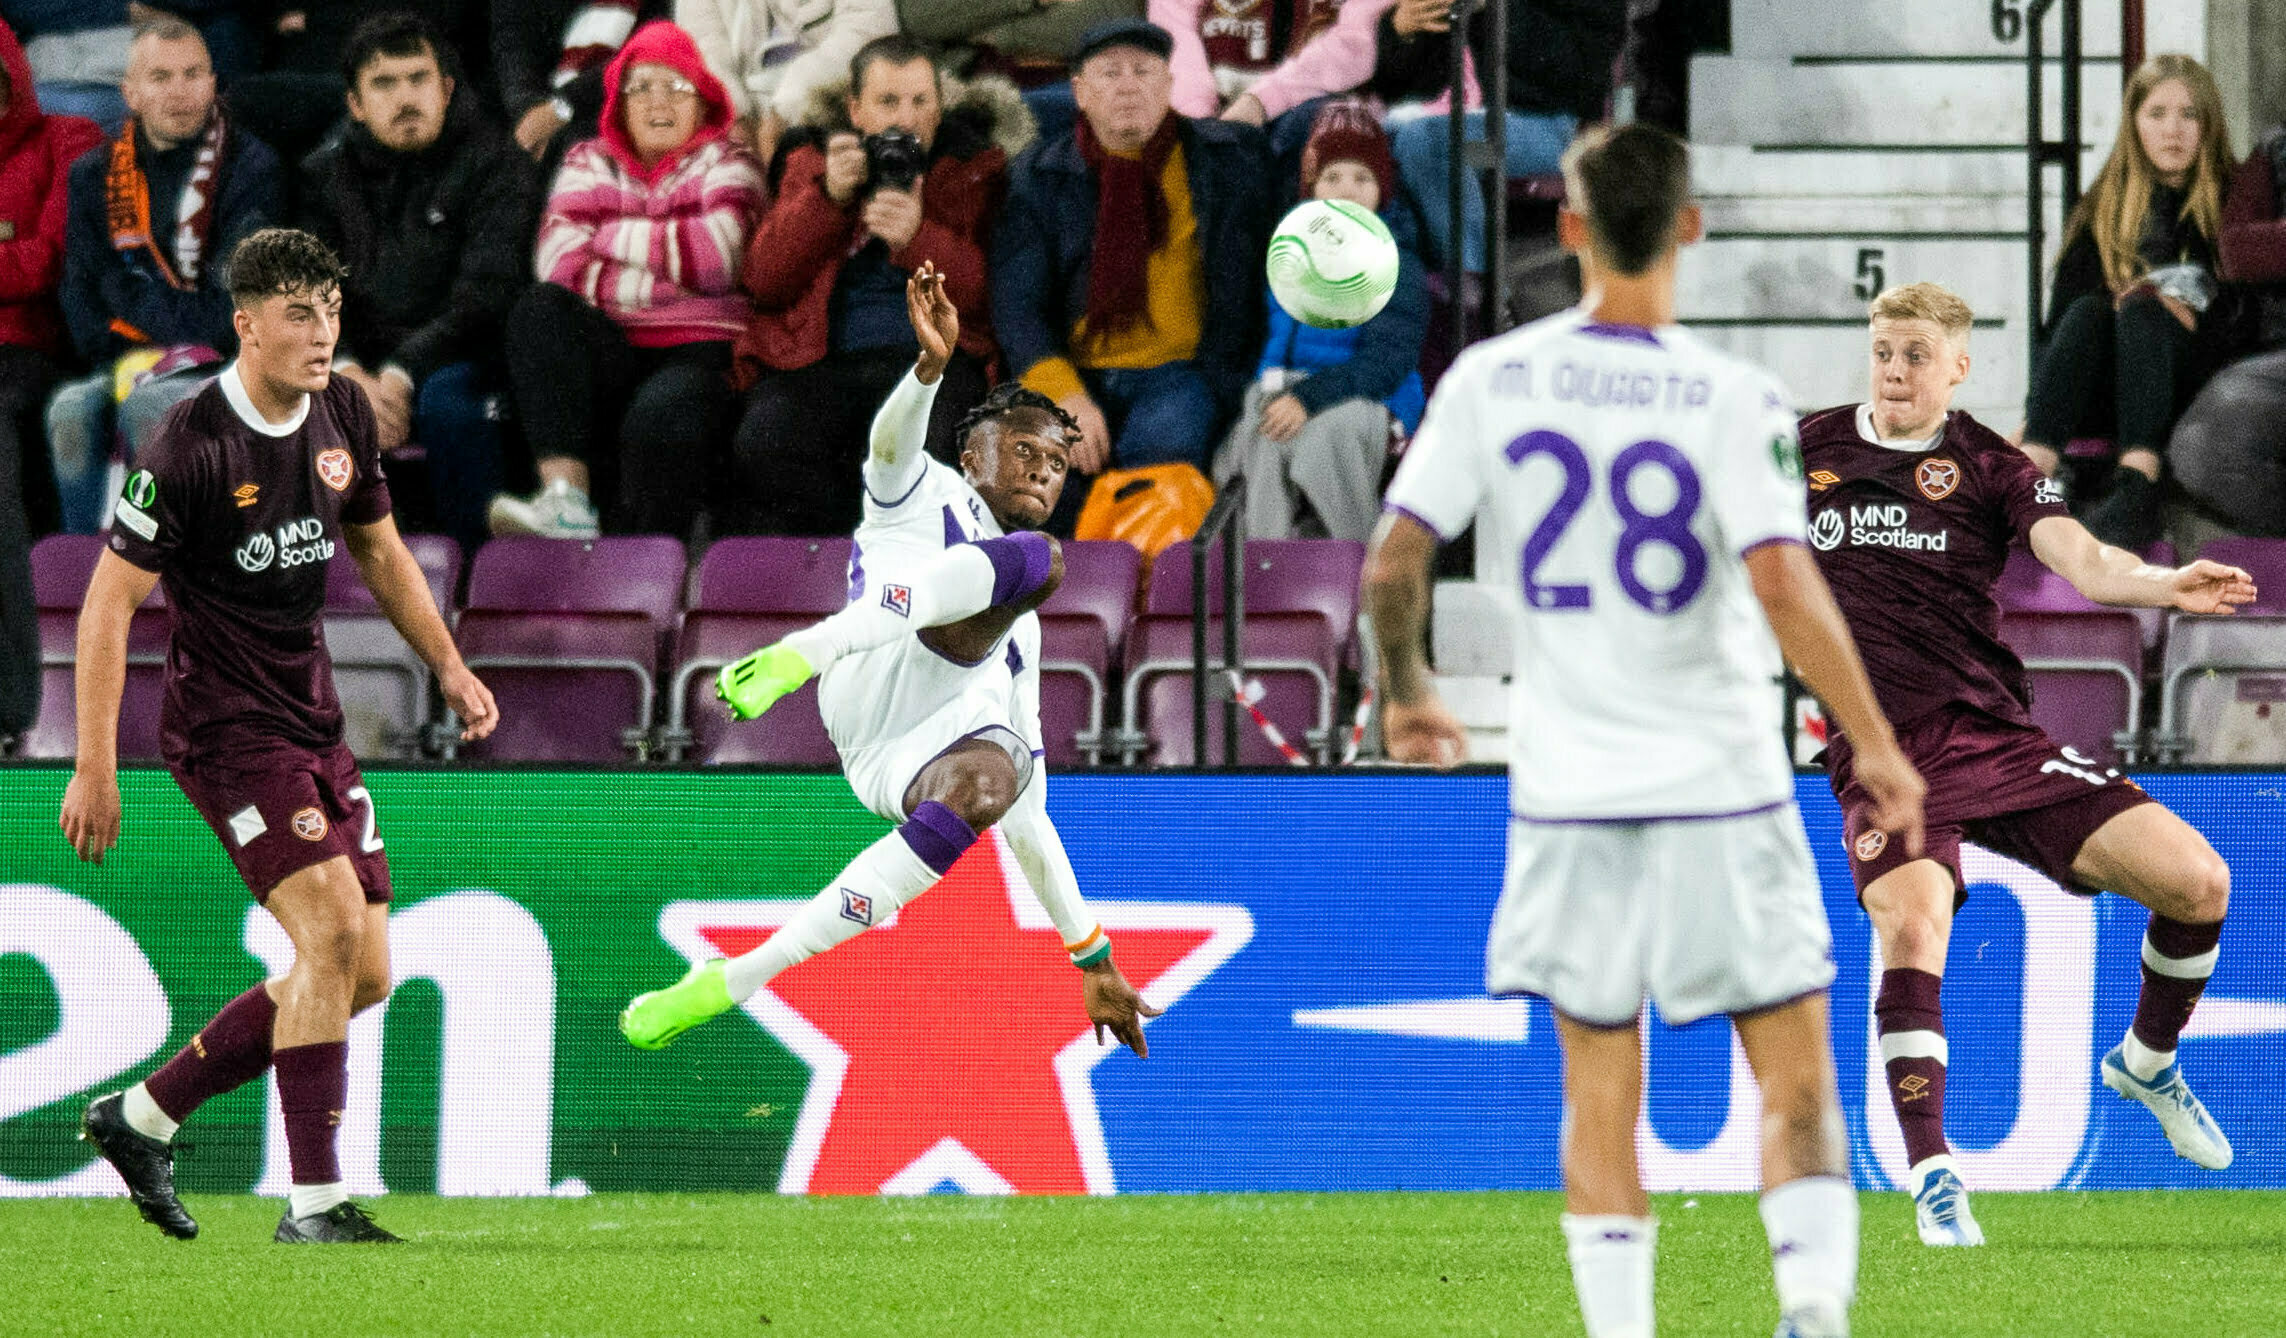 Hearts 0-3 Fiorentina – Full Time Report